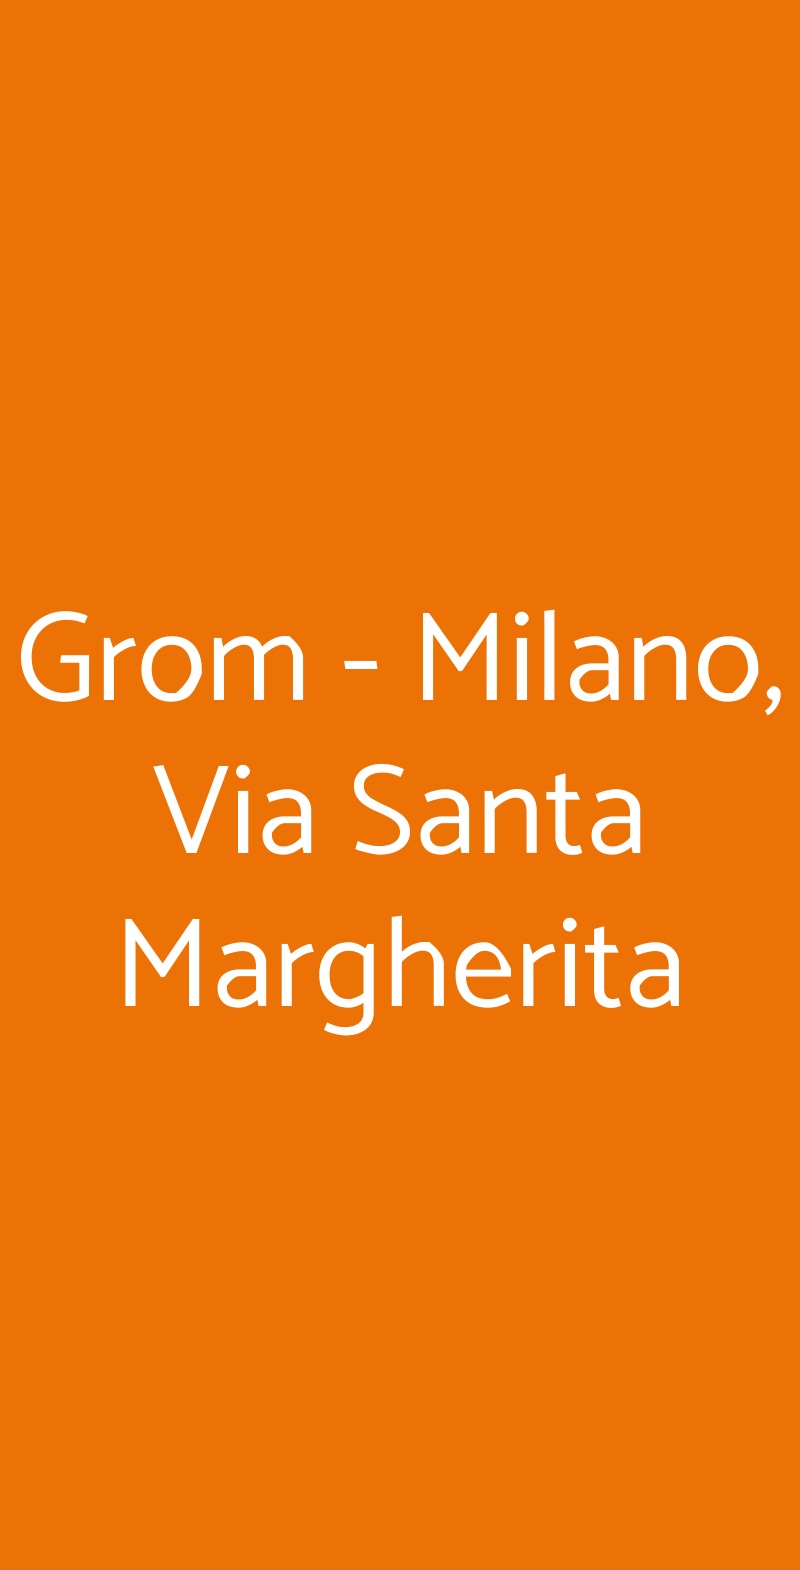 Grom - Milano, Via Santa Margherita Milano menù 1 pagina